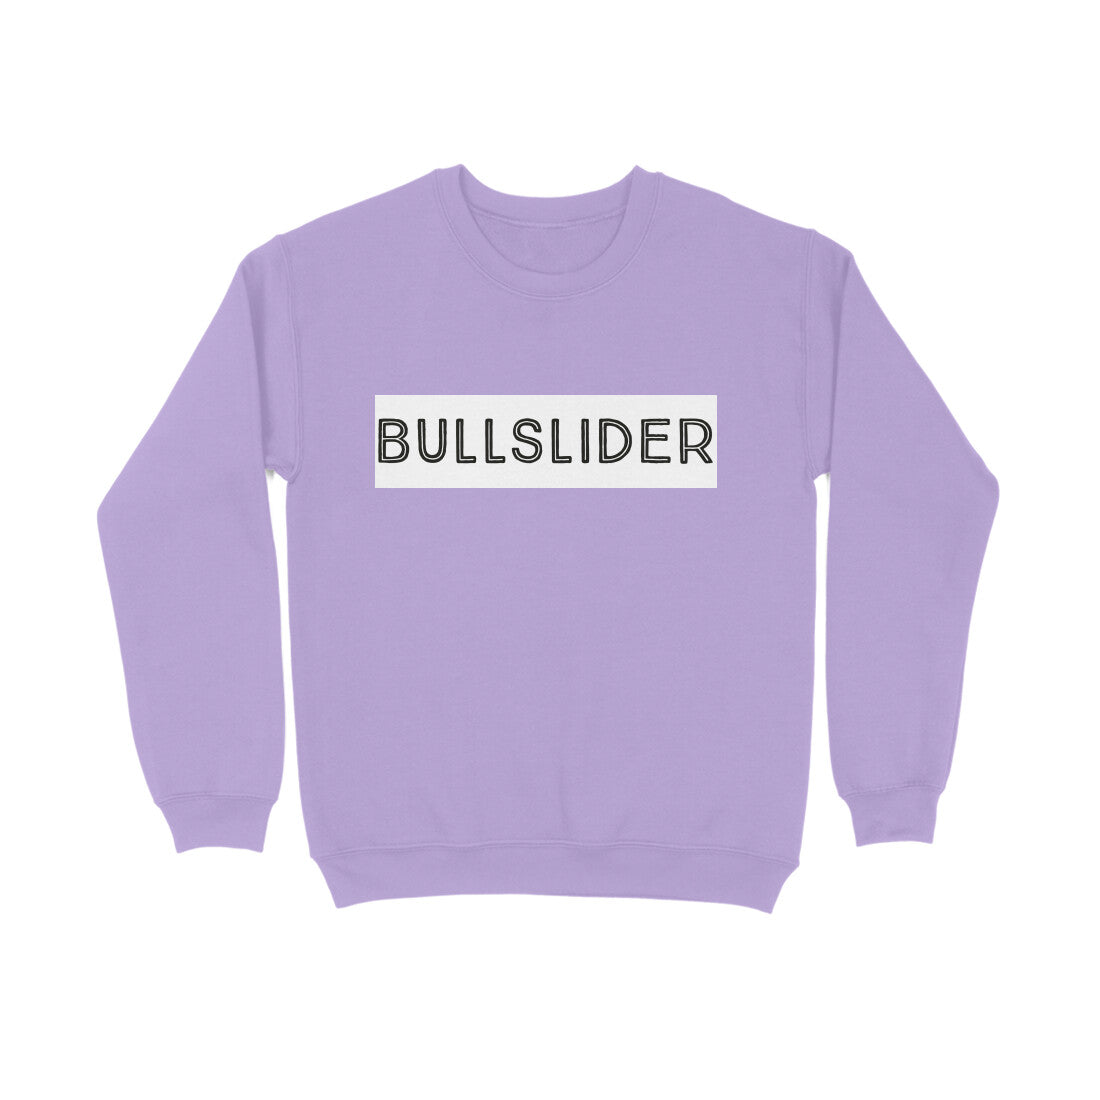 Men's printed BULLSLIDER sweatshirt